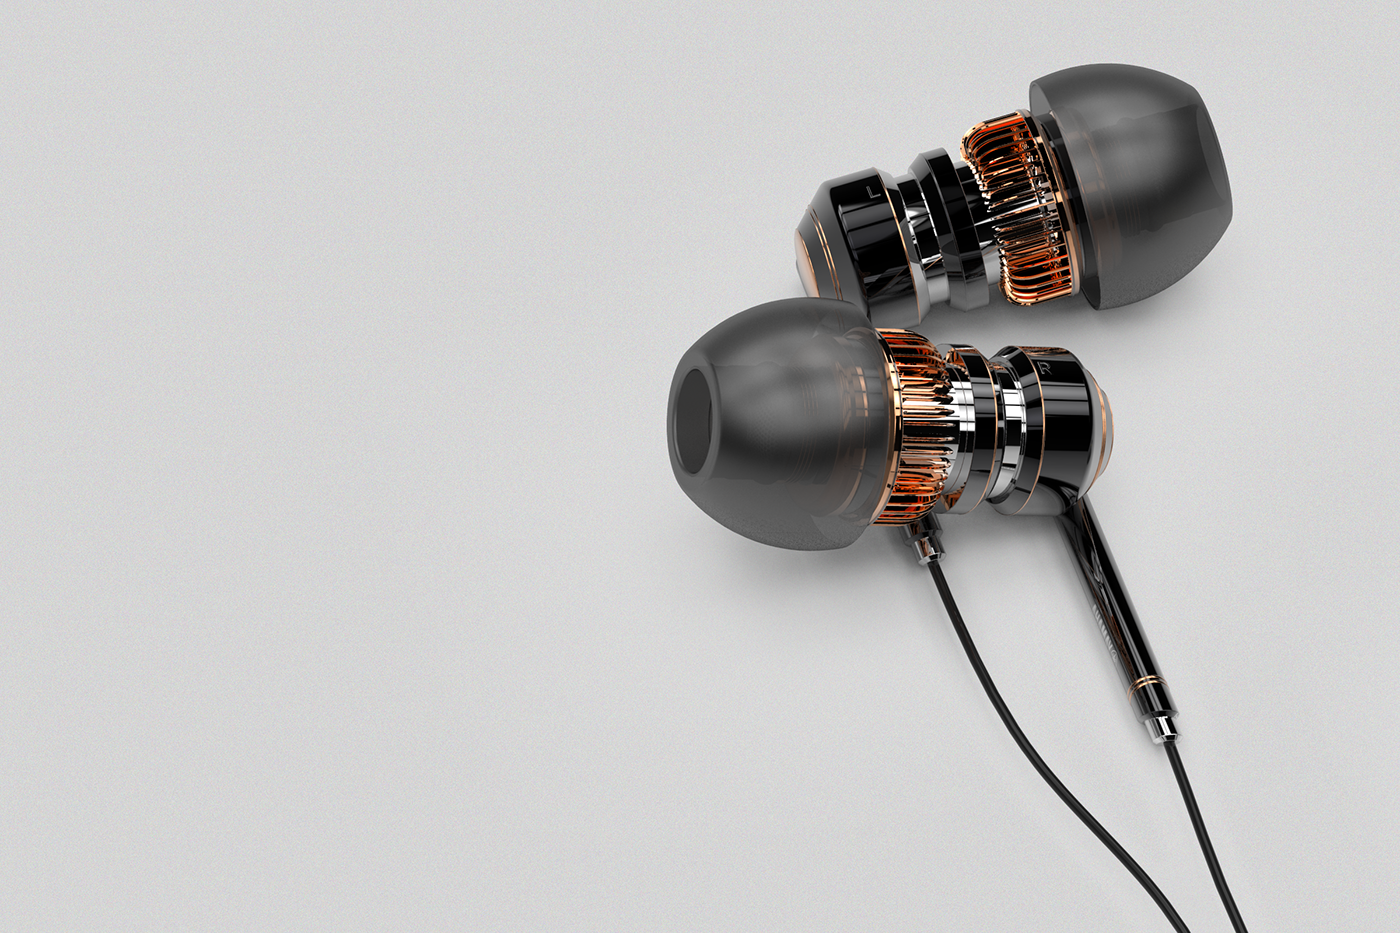 productdesign design earphones yamaha concept Turbine Jet engine product Render keyshot Rhino 3D 3dmodel copper